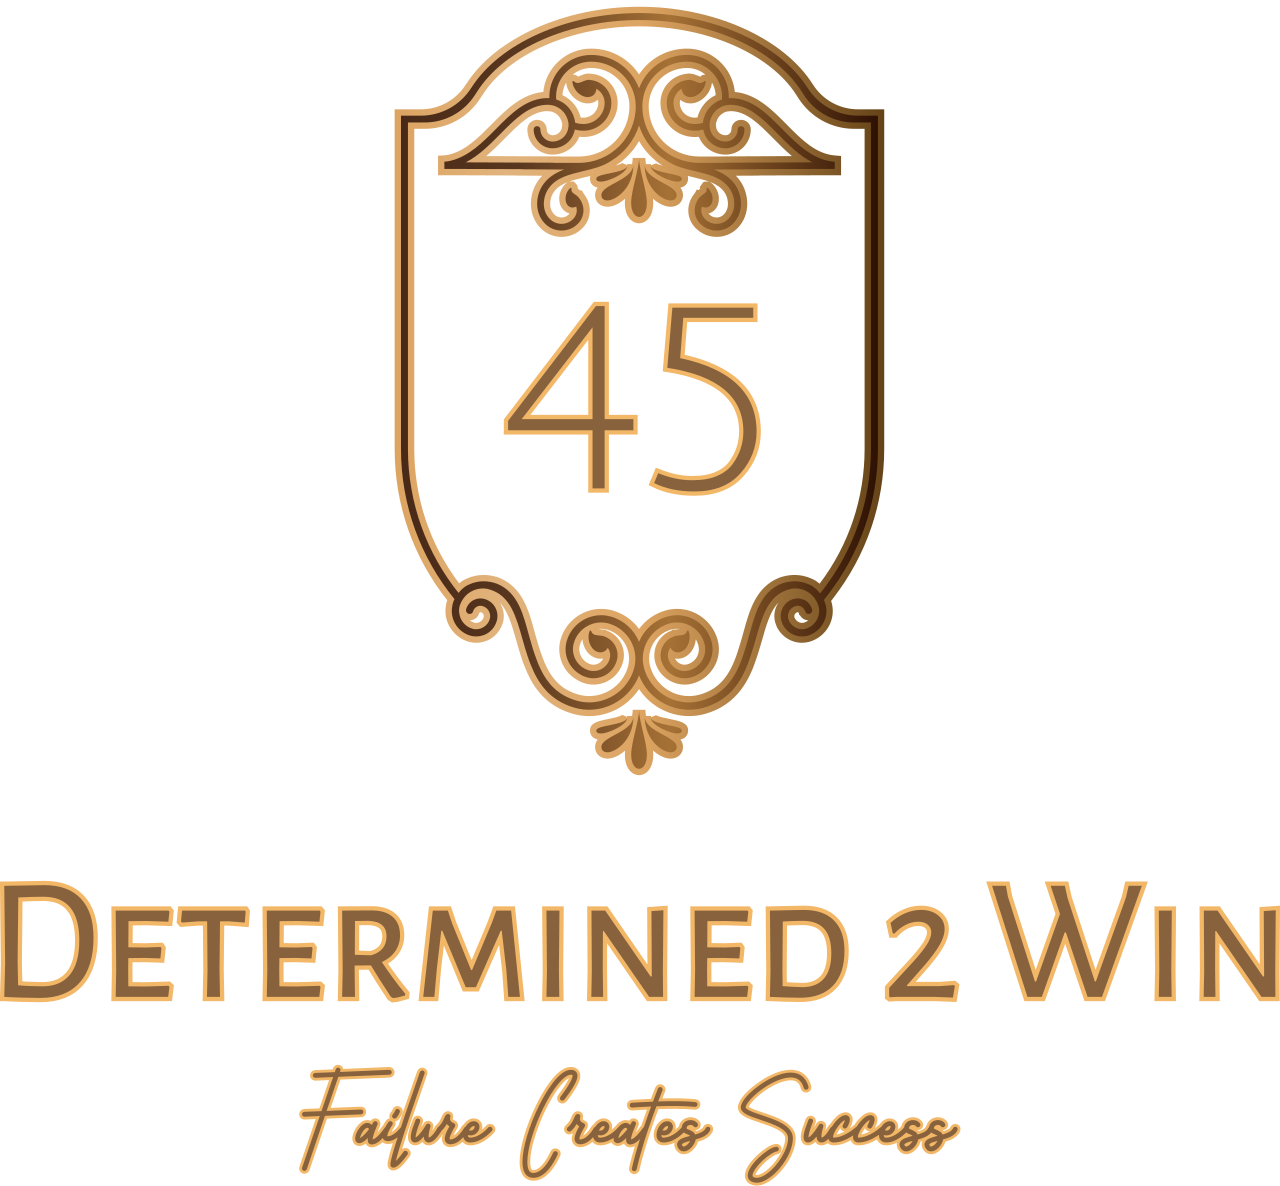 Determined 2 Win "45"'s logo